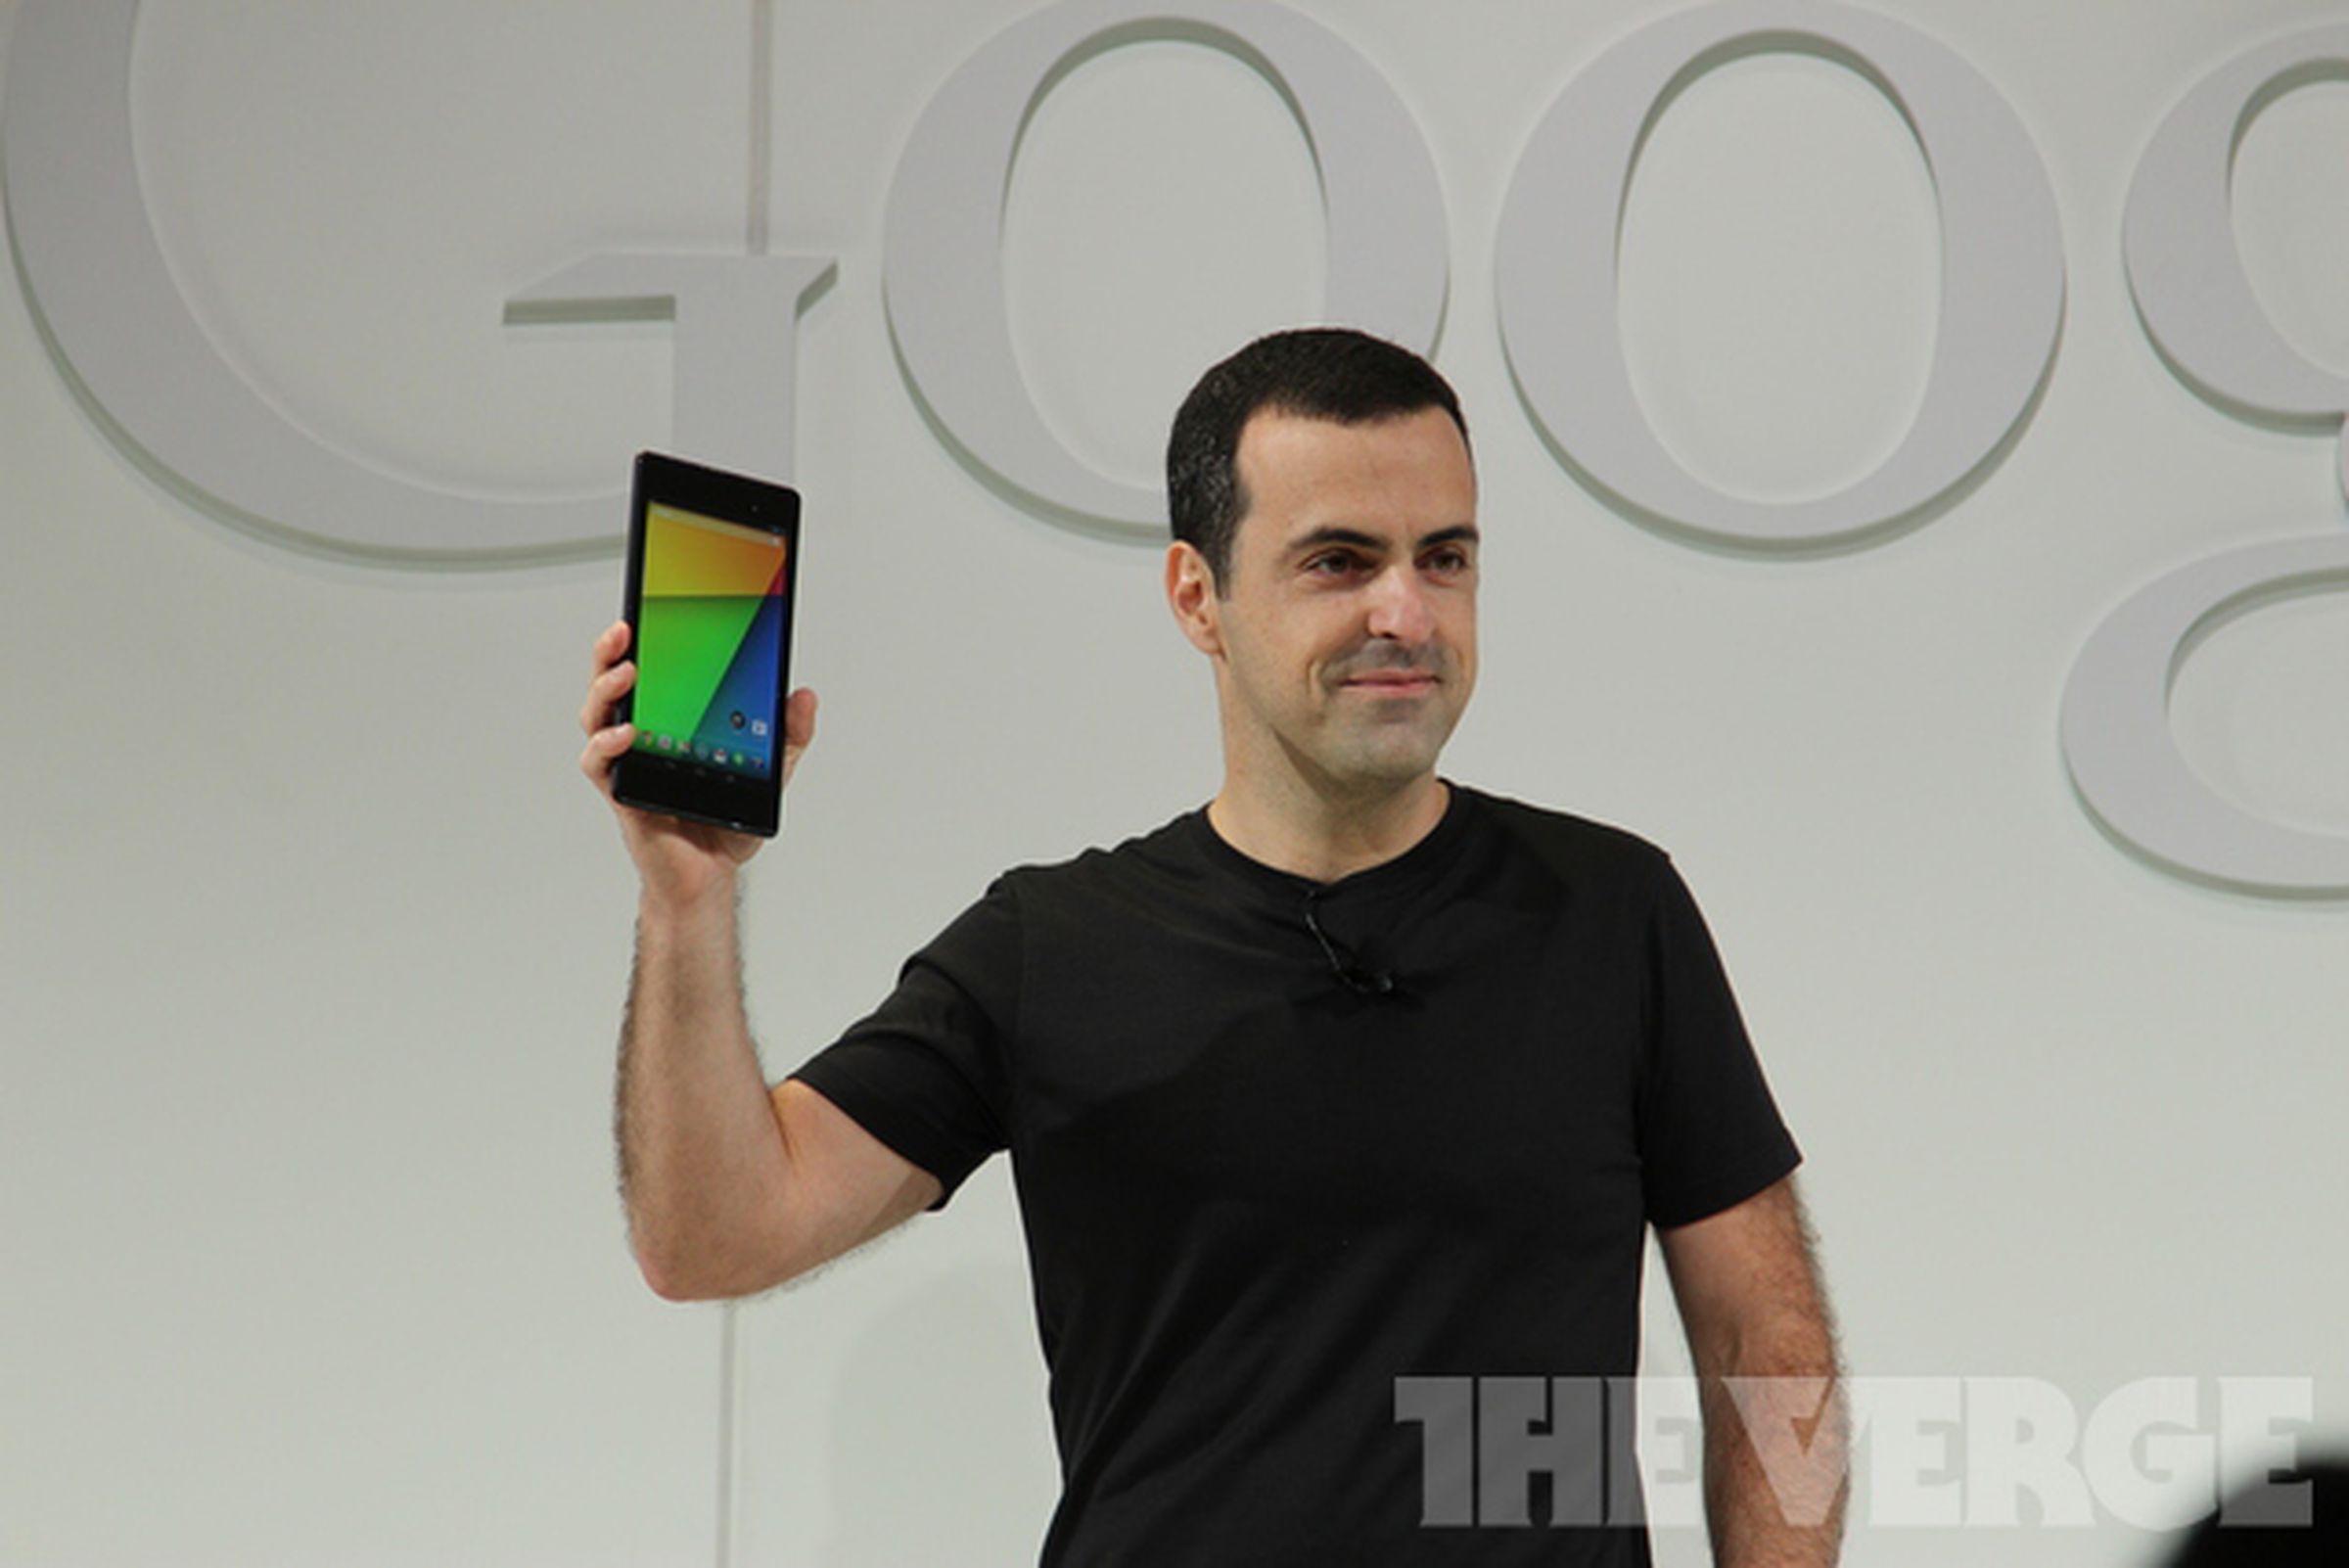 Nexus 7 photos from Google's 'Breakfast with Sundar' event